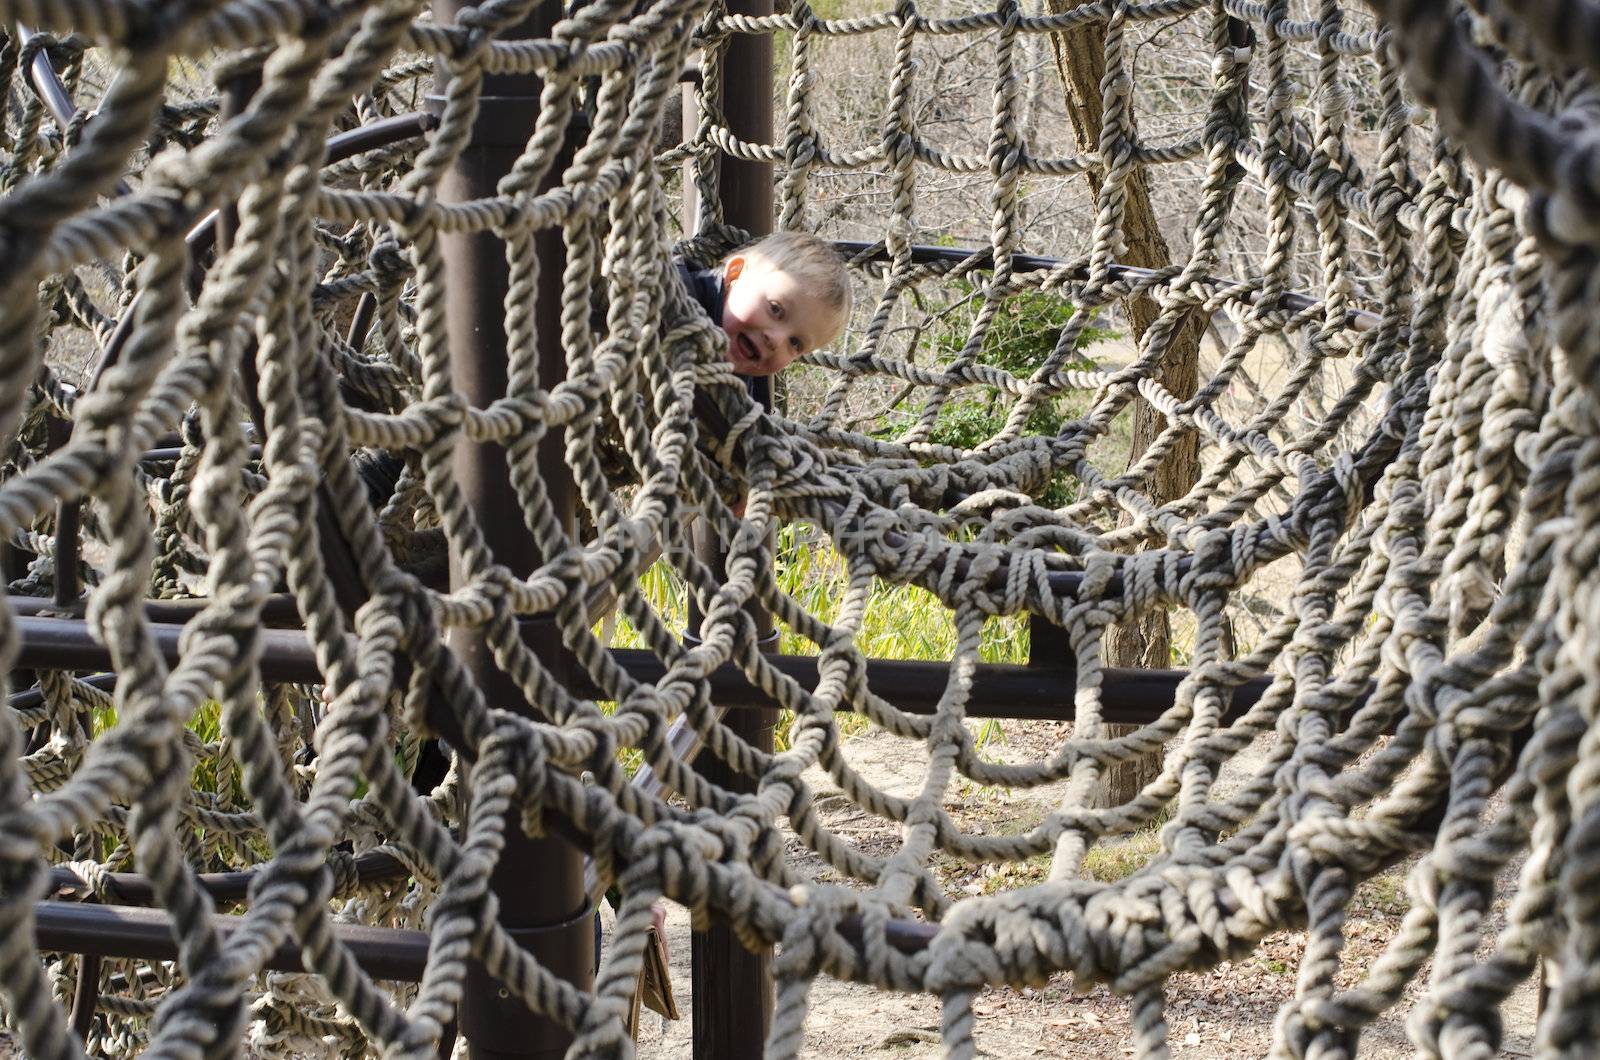 Young boy in a climbing net by Arrxxx